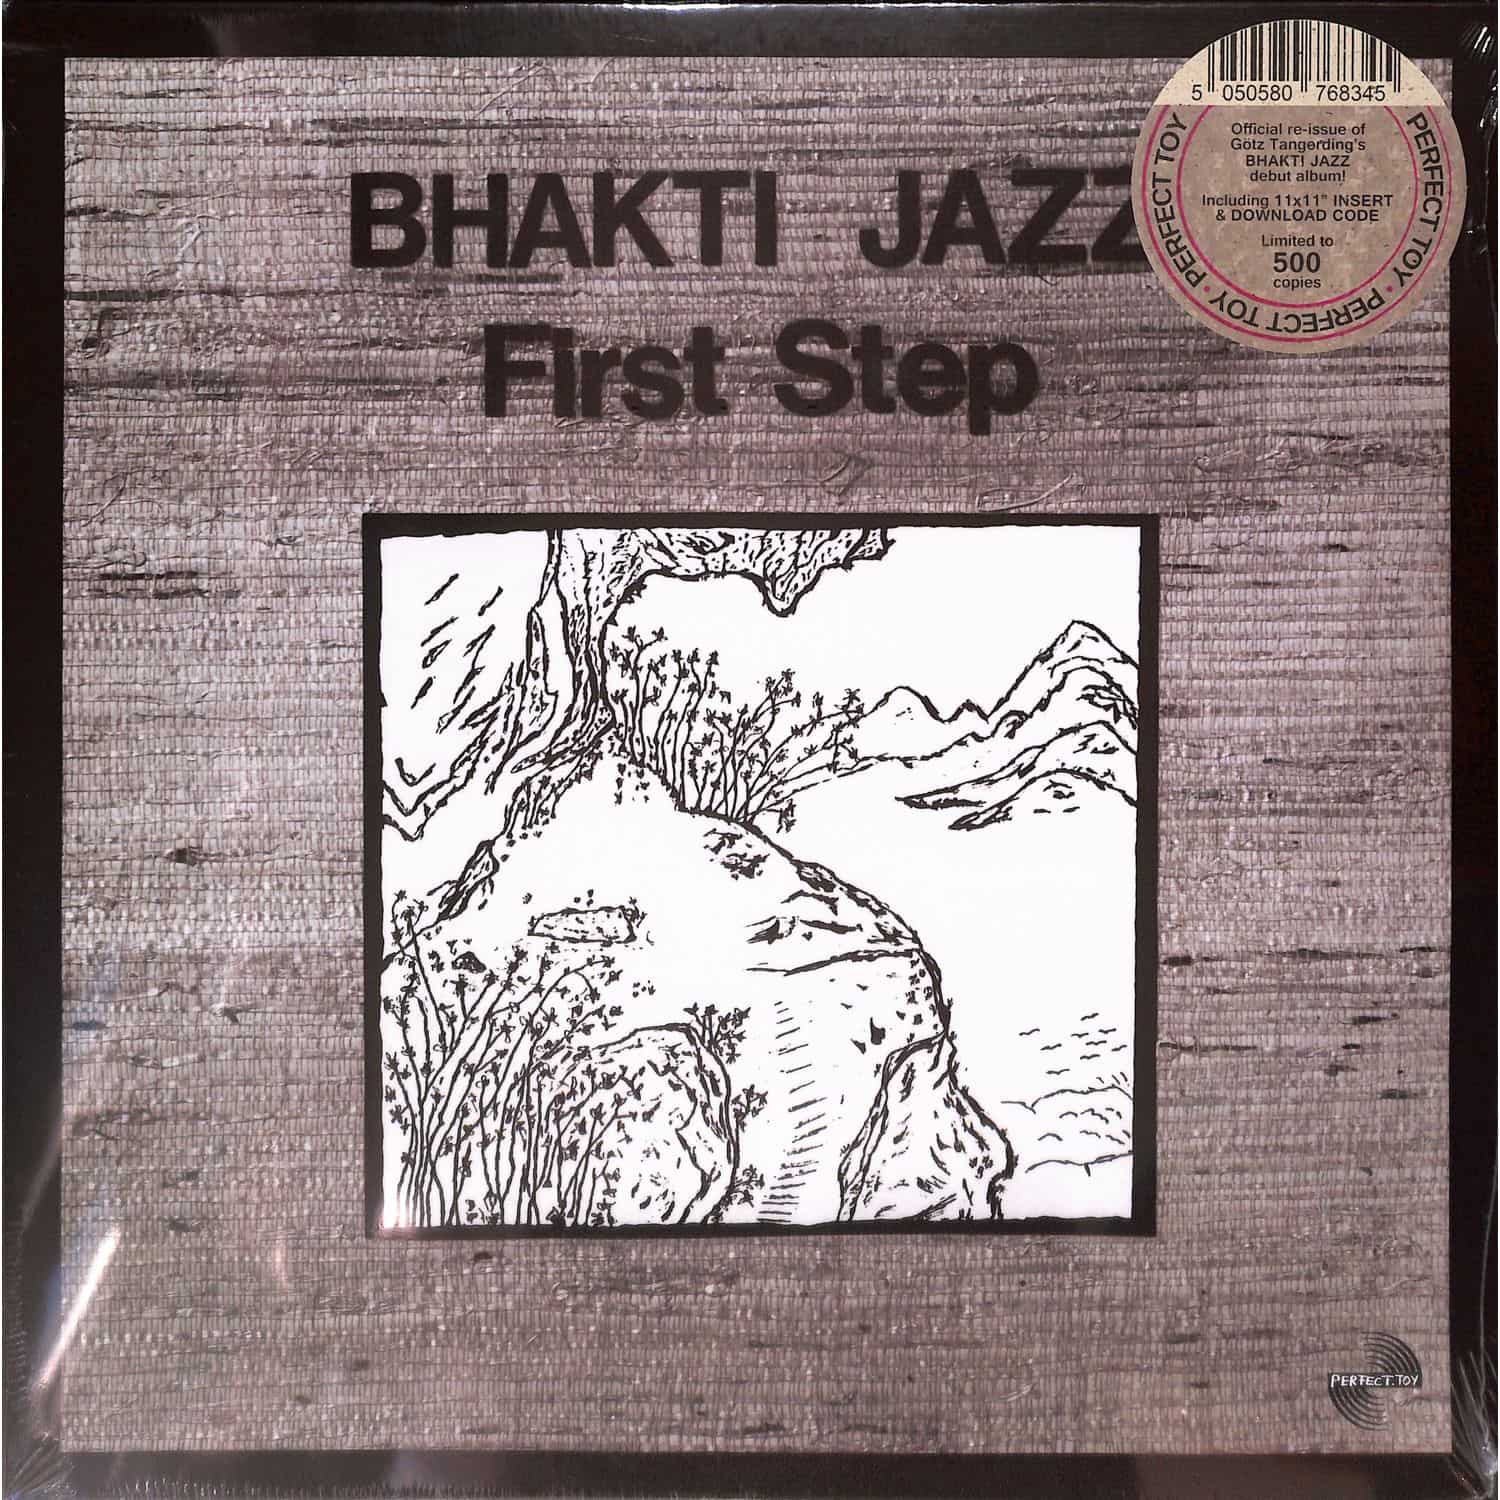 Bhakti Jazz - FIRST STEP 